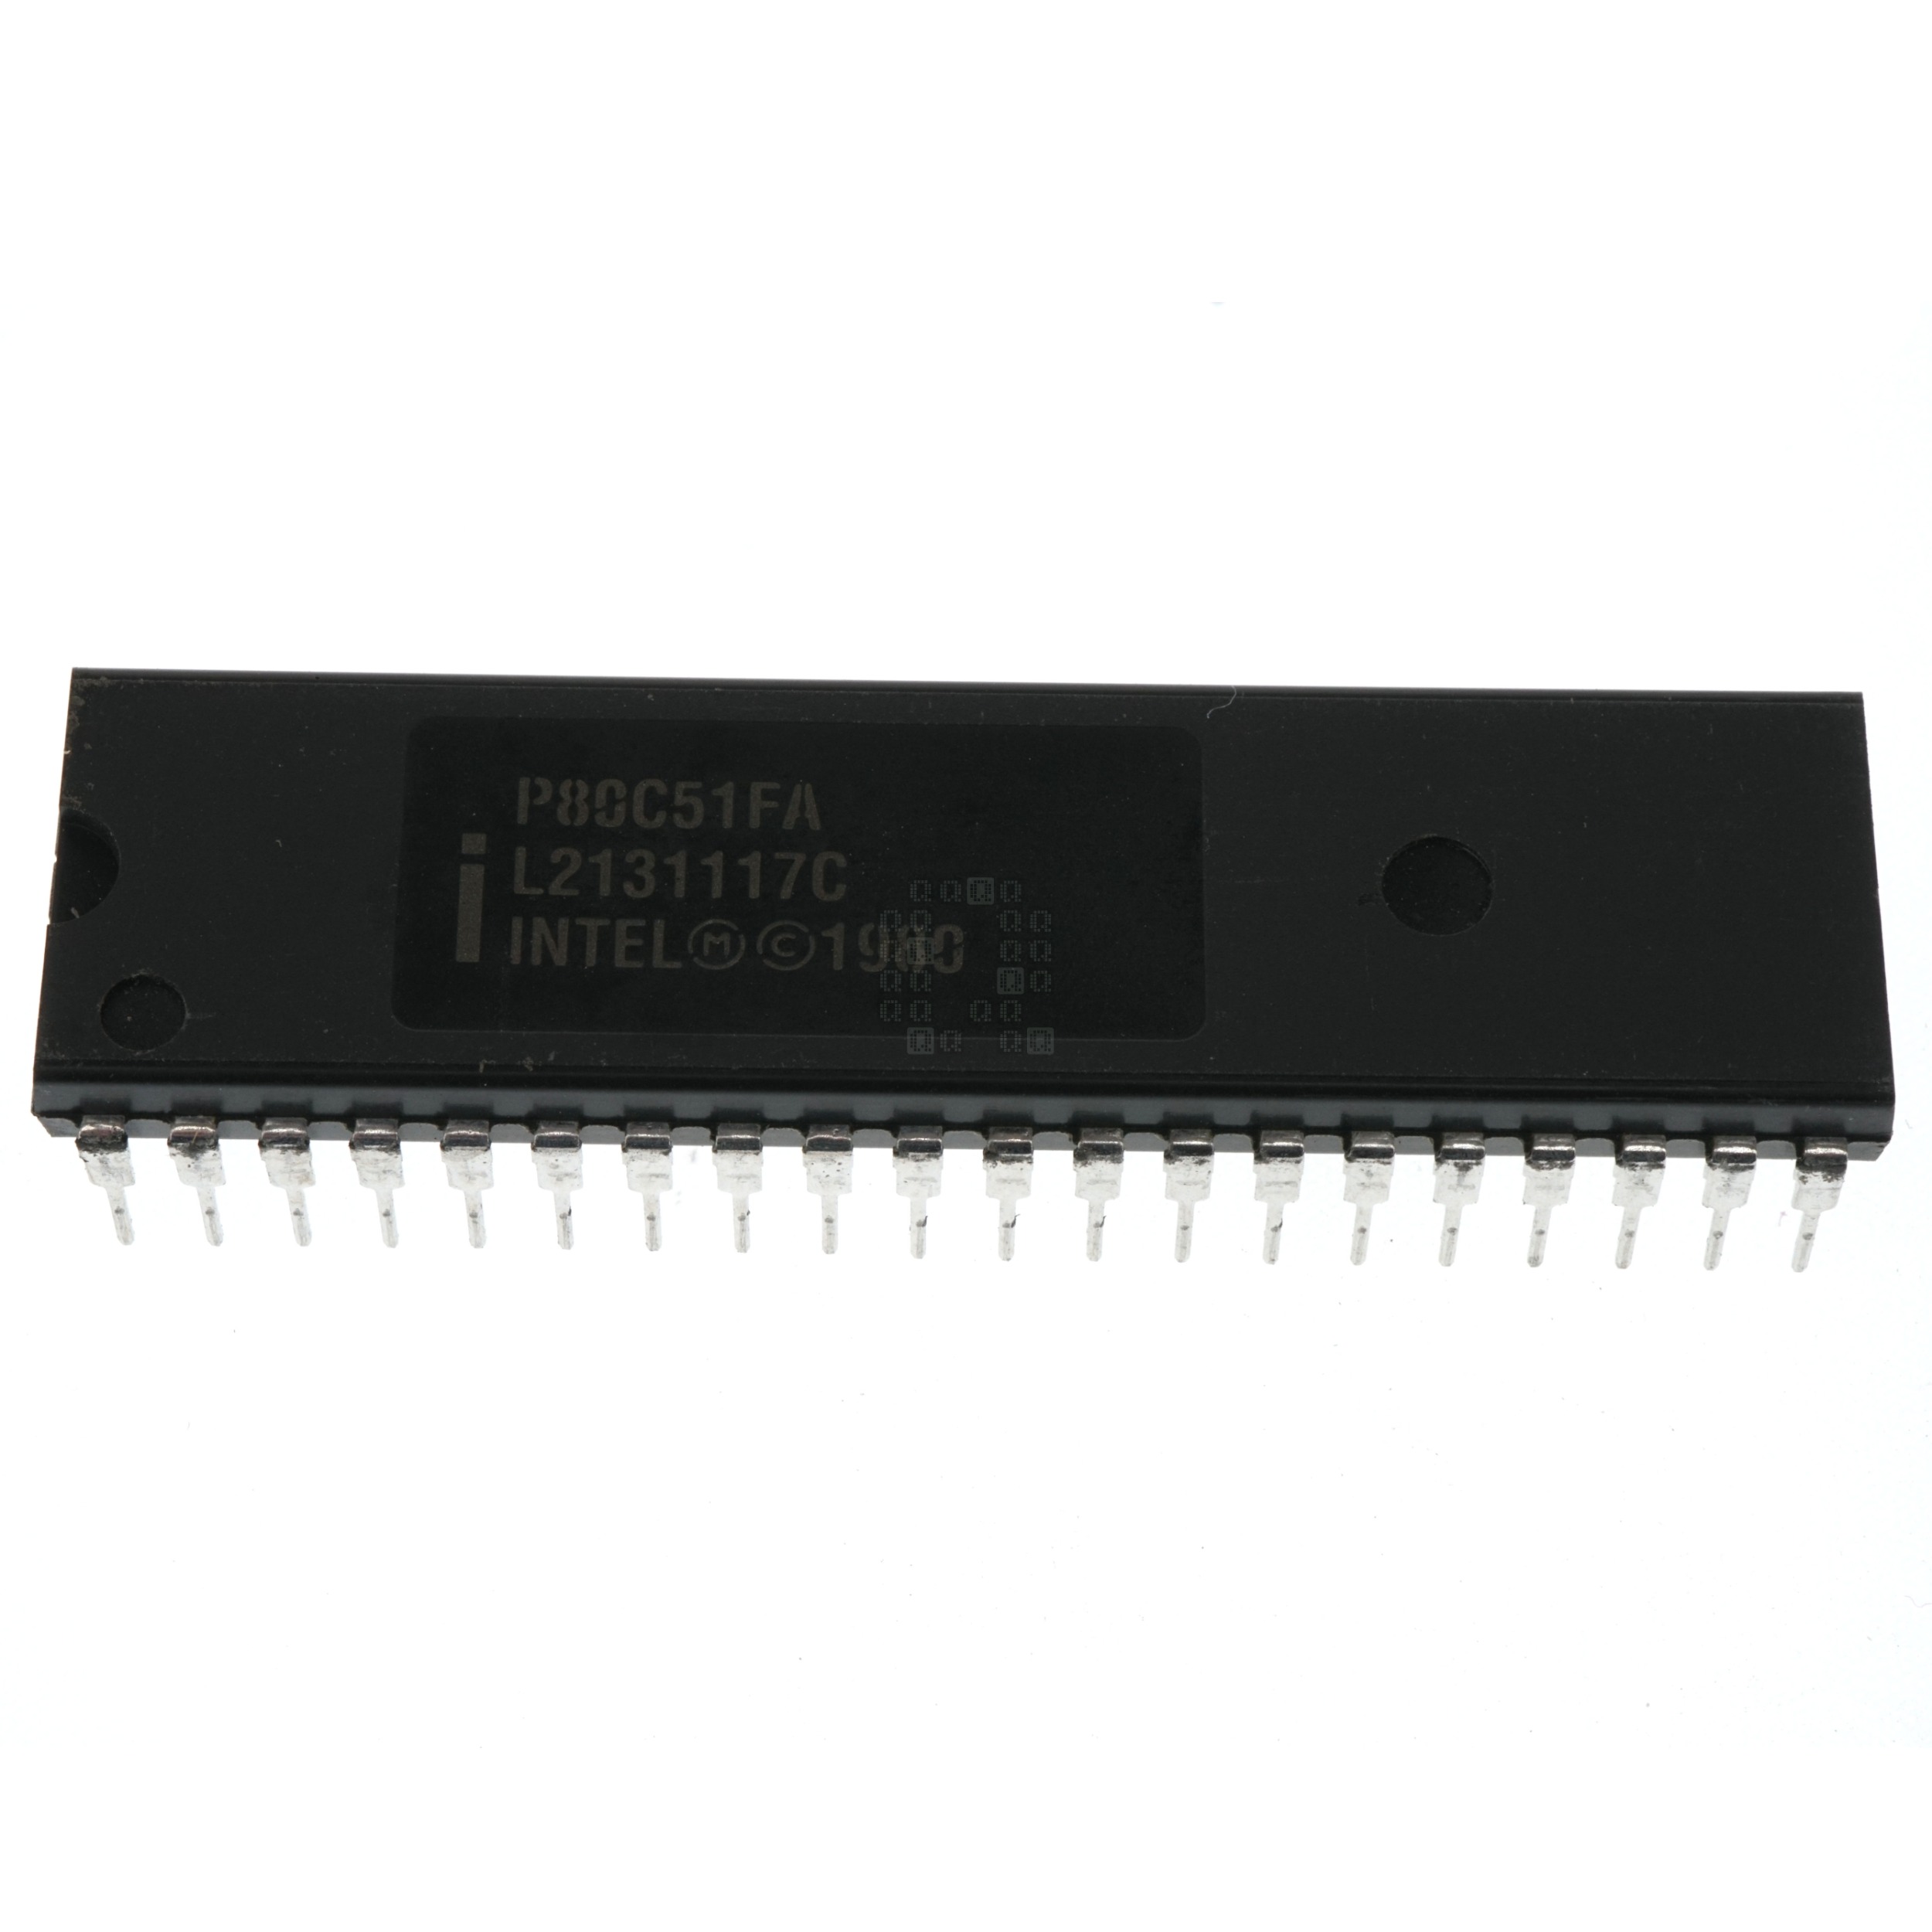 Intel P80C51FA 8-bit Microcontroller, ROMless, DIP40, 2.7-5.5VDC, 0 to 16Mhz